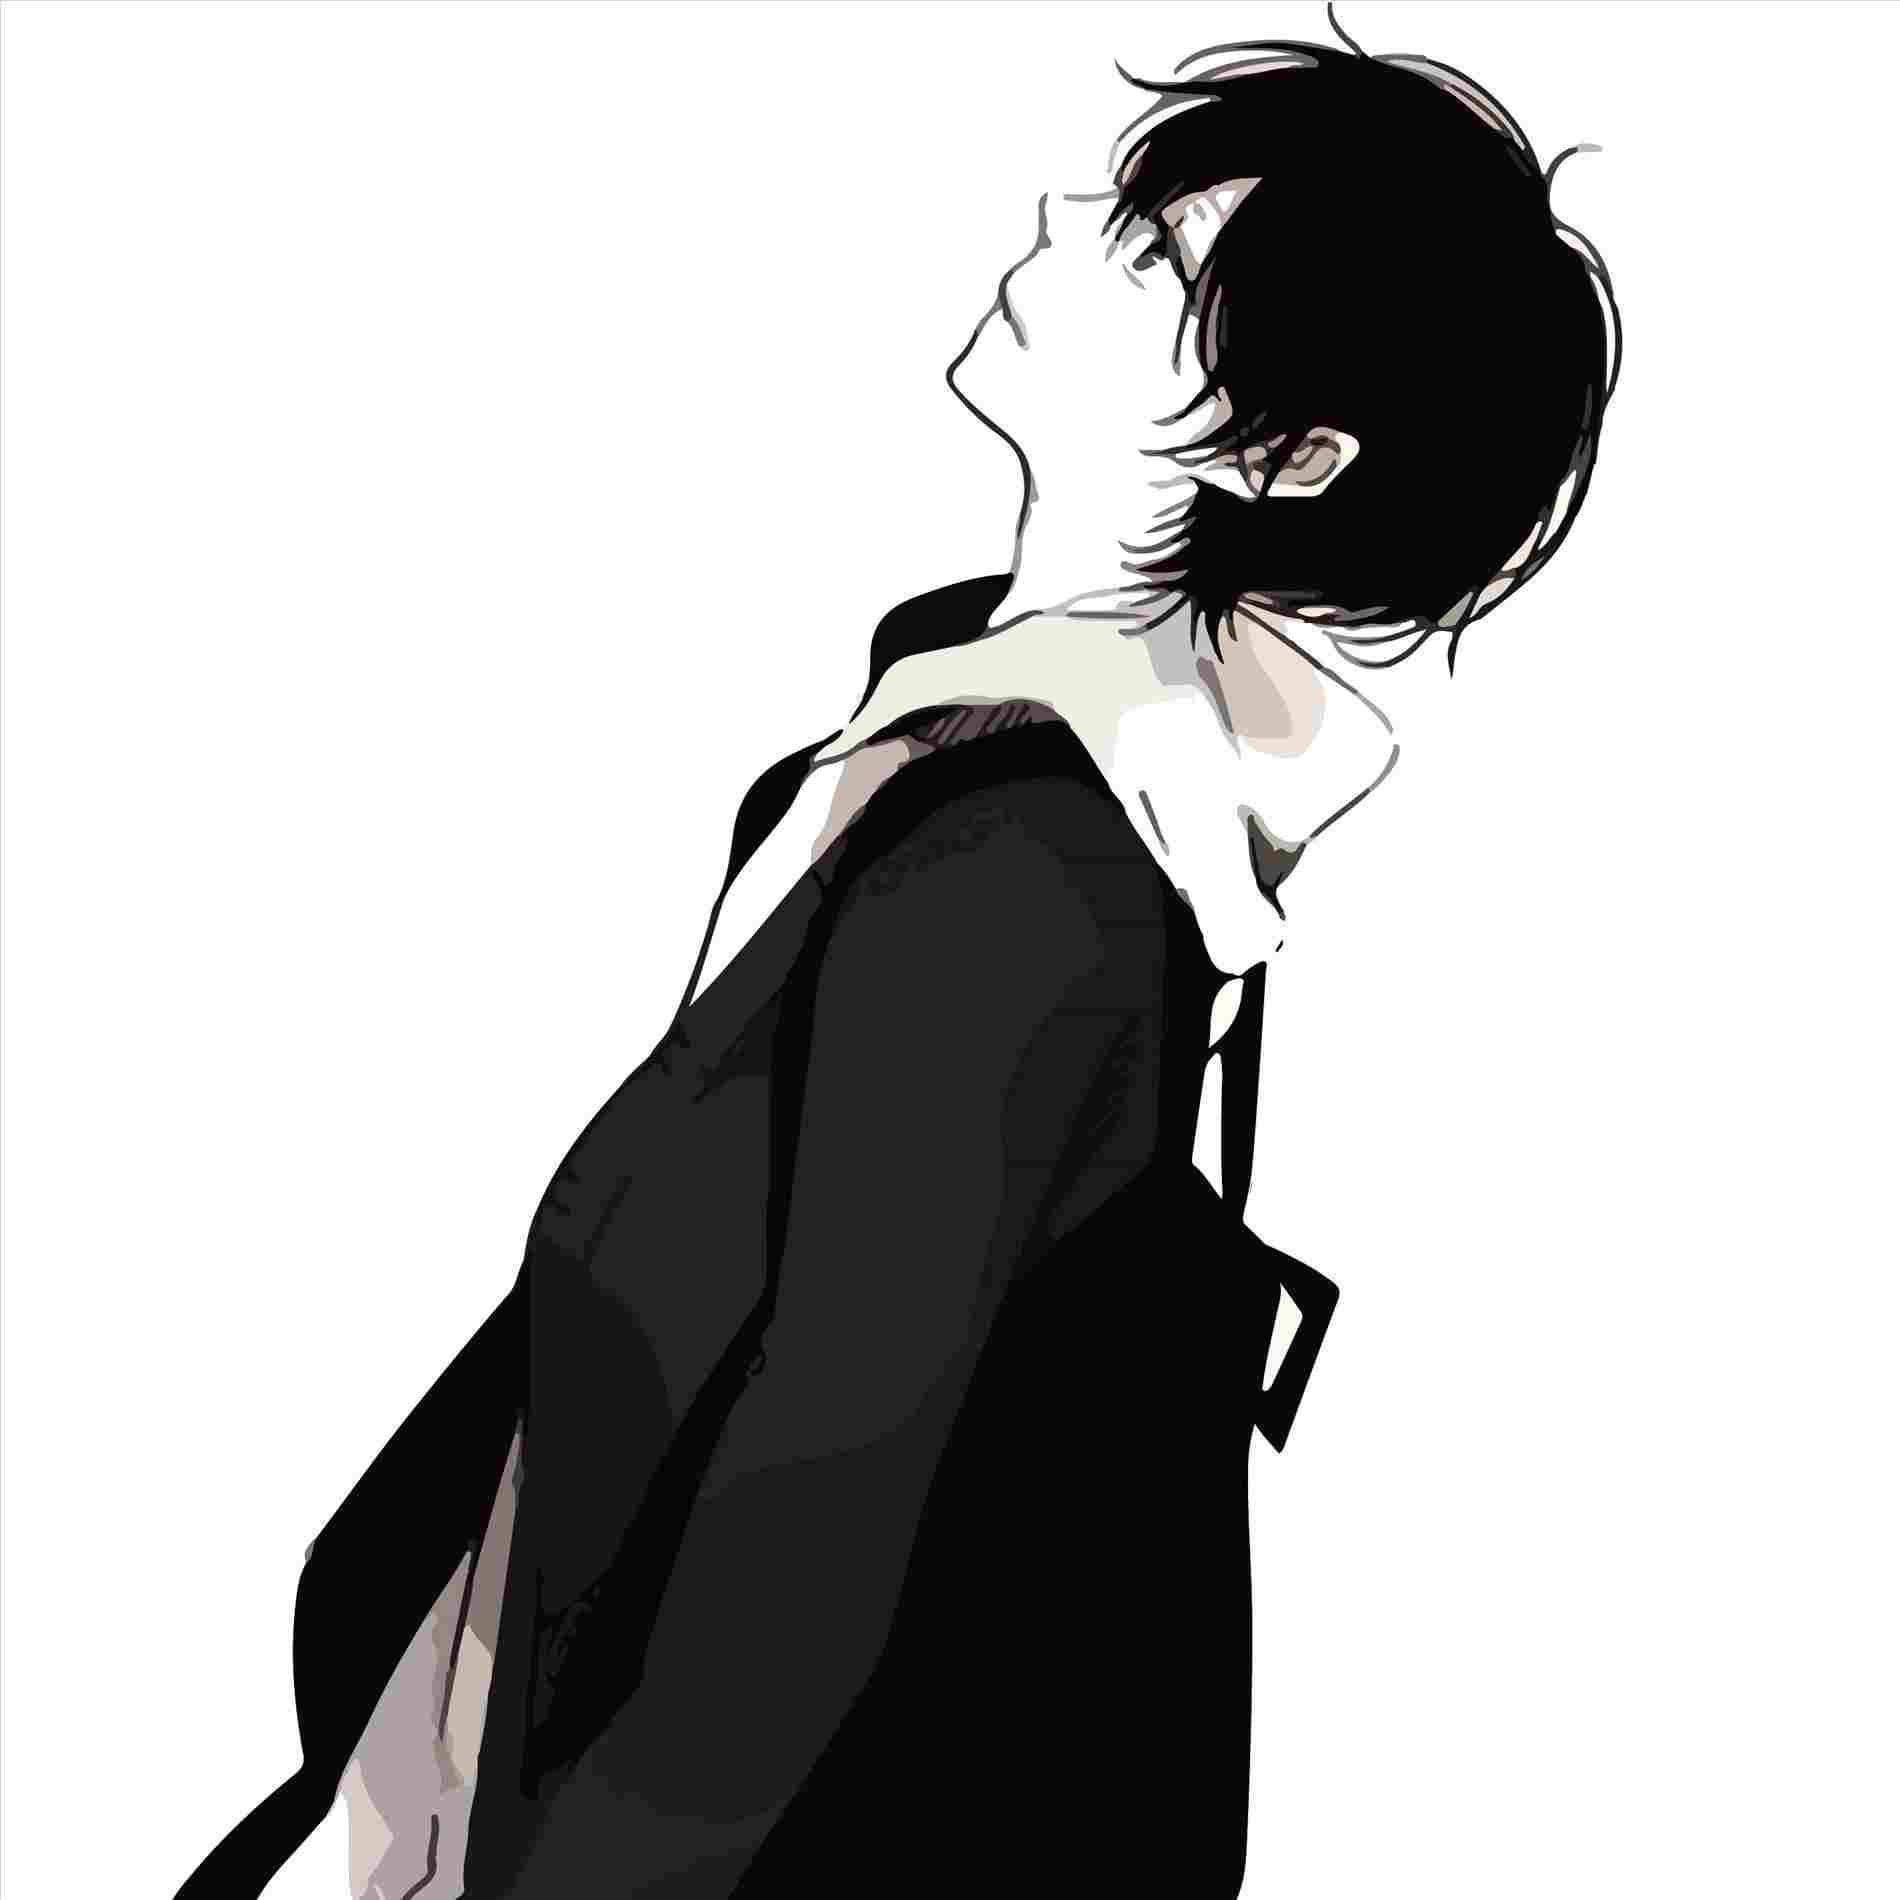 Leaning Sad Anime Boy Black And White Pfp Wallpaper